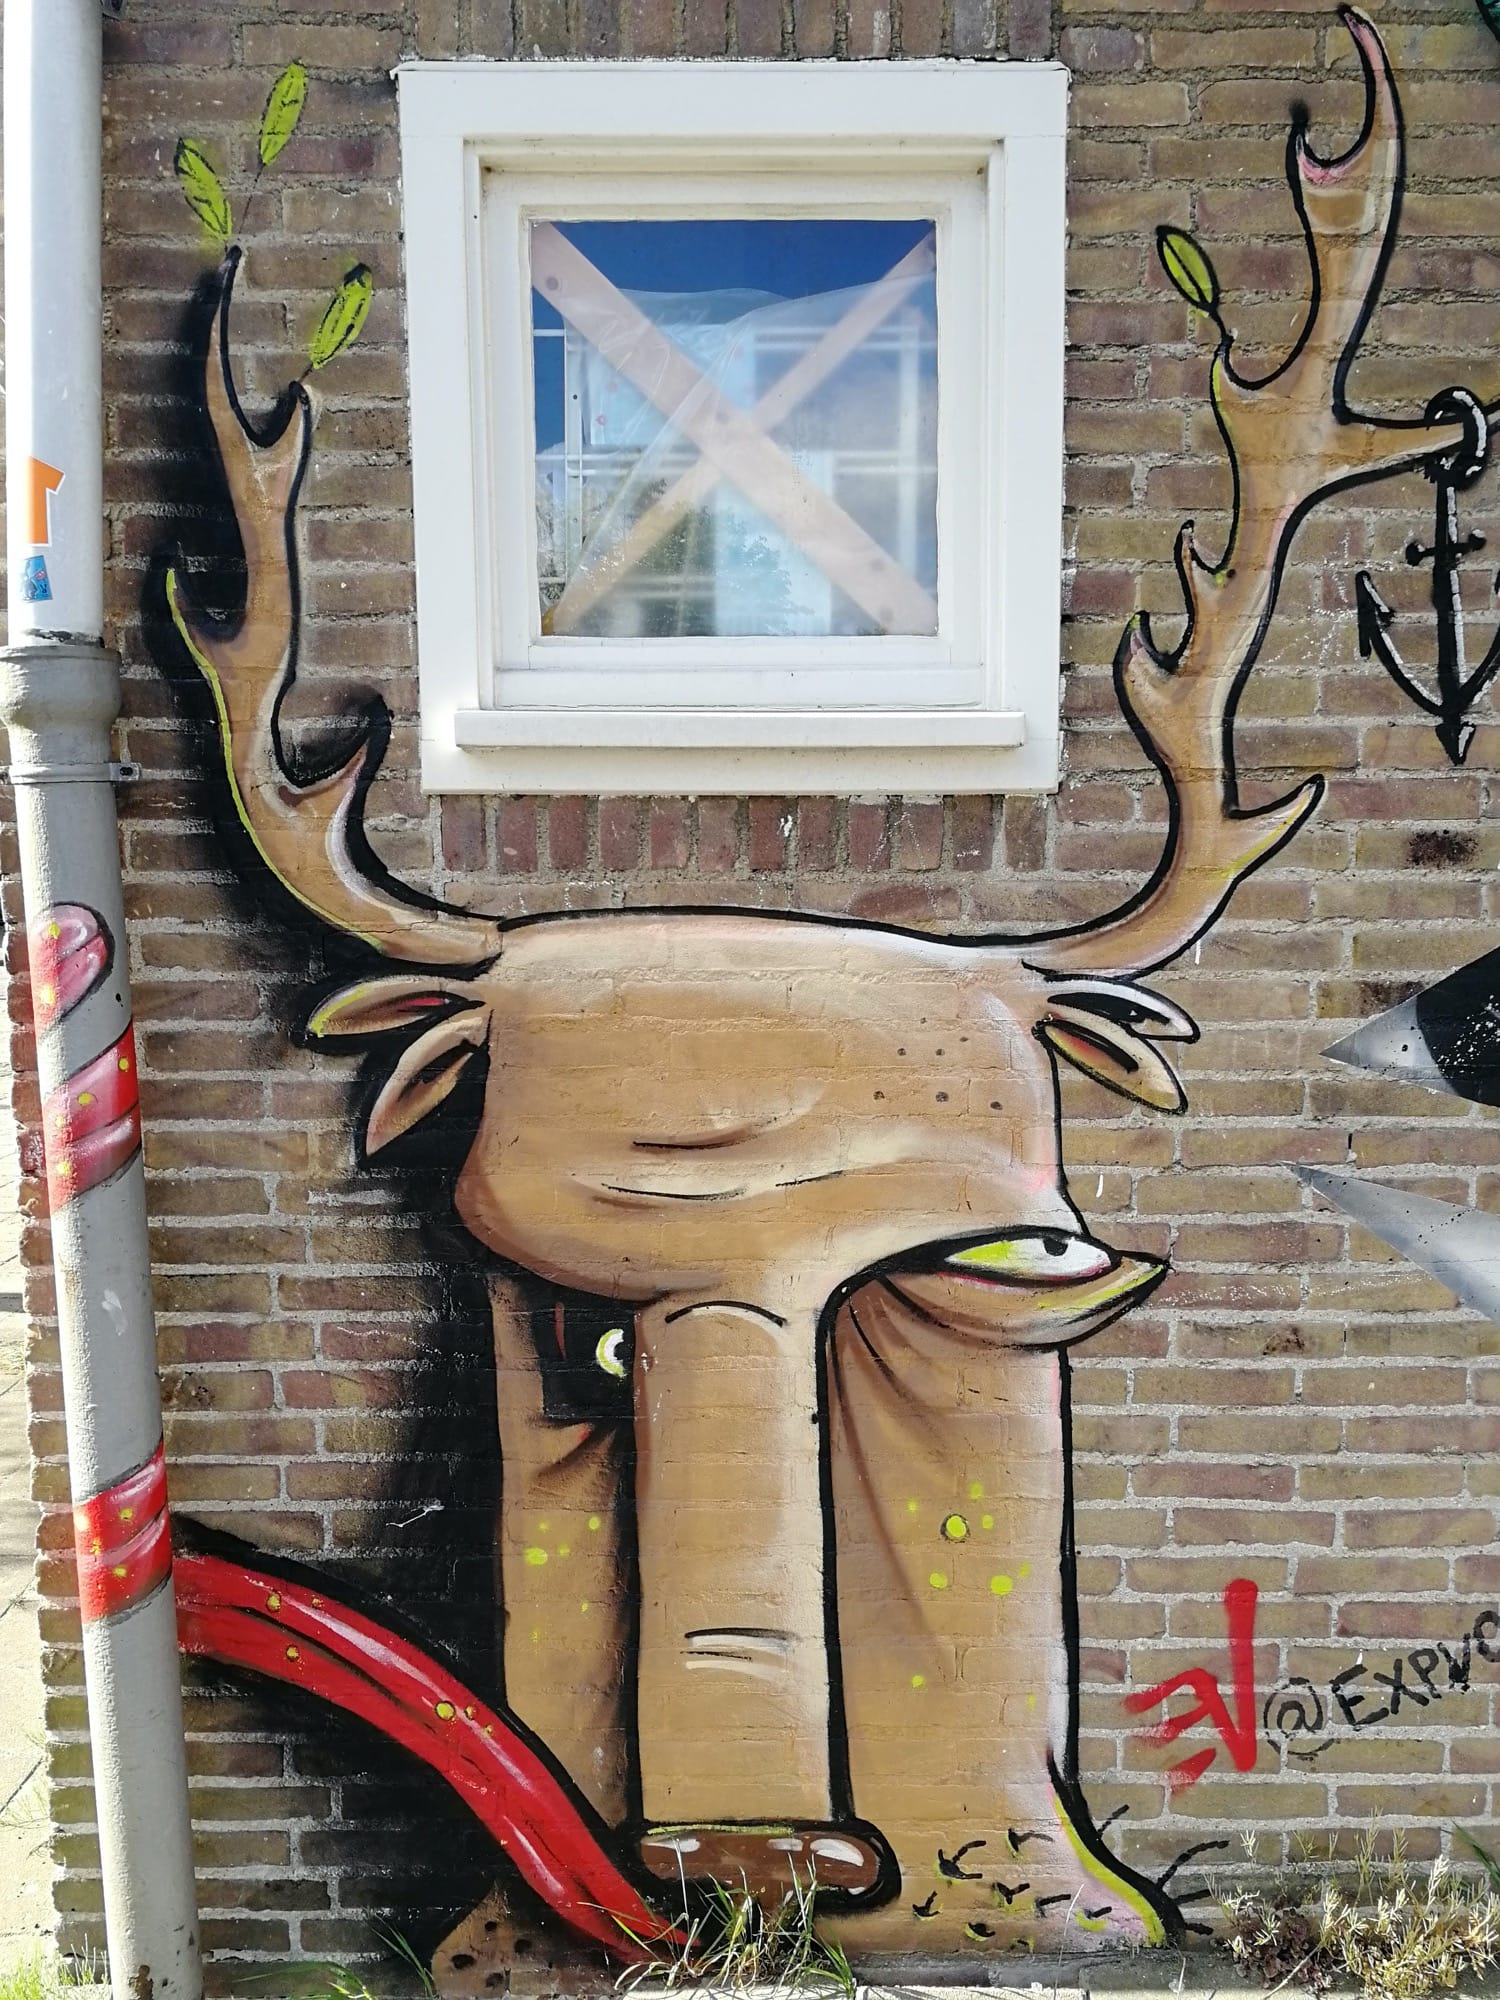 Graffiti 1764  captured by Rabot in Amsterdam Netherlands